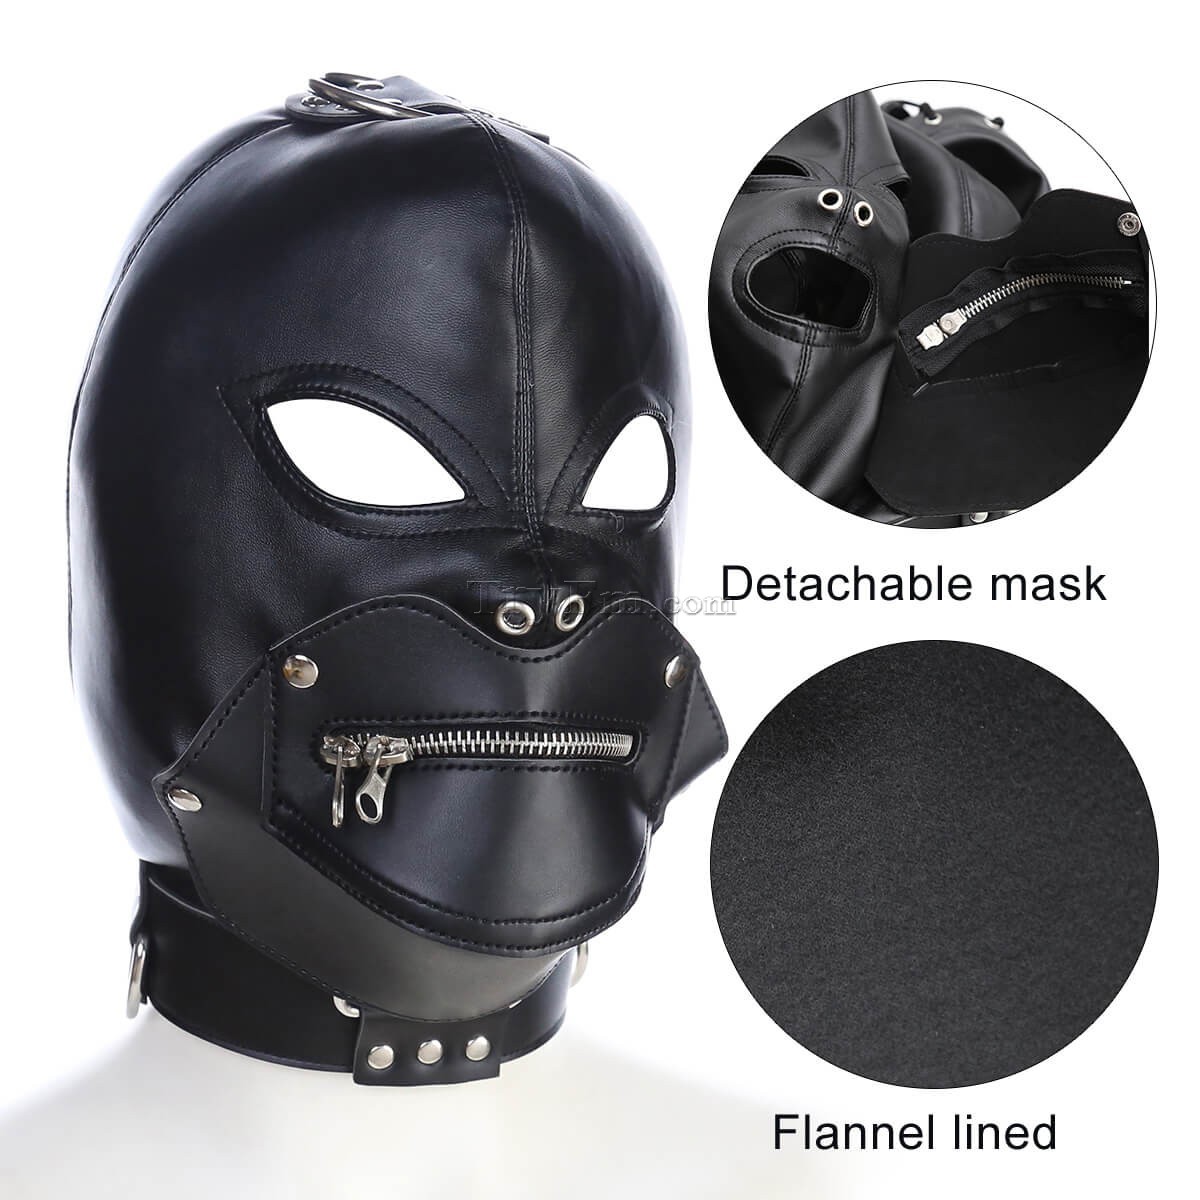 1-Detachable-mask-hood-with-zipper3.jpg